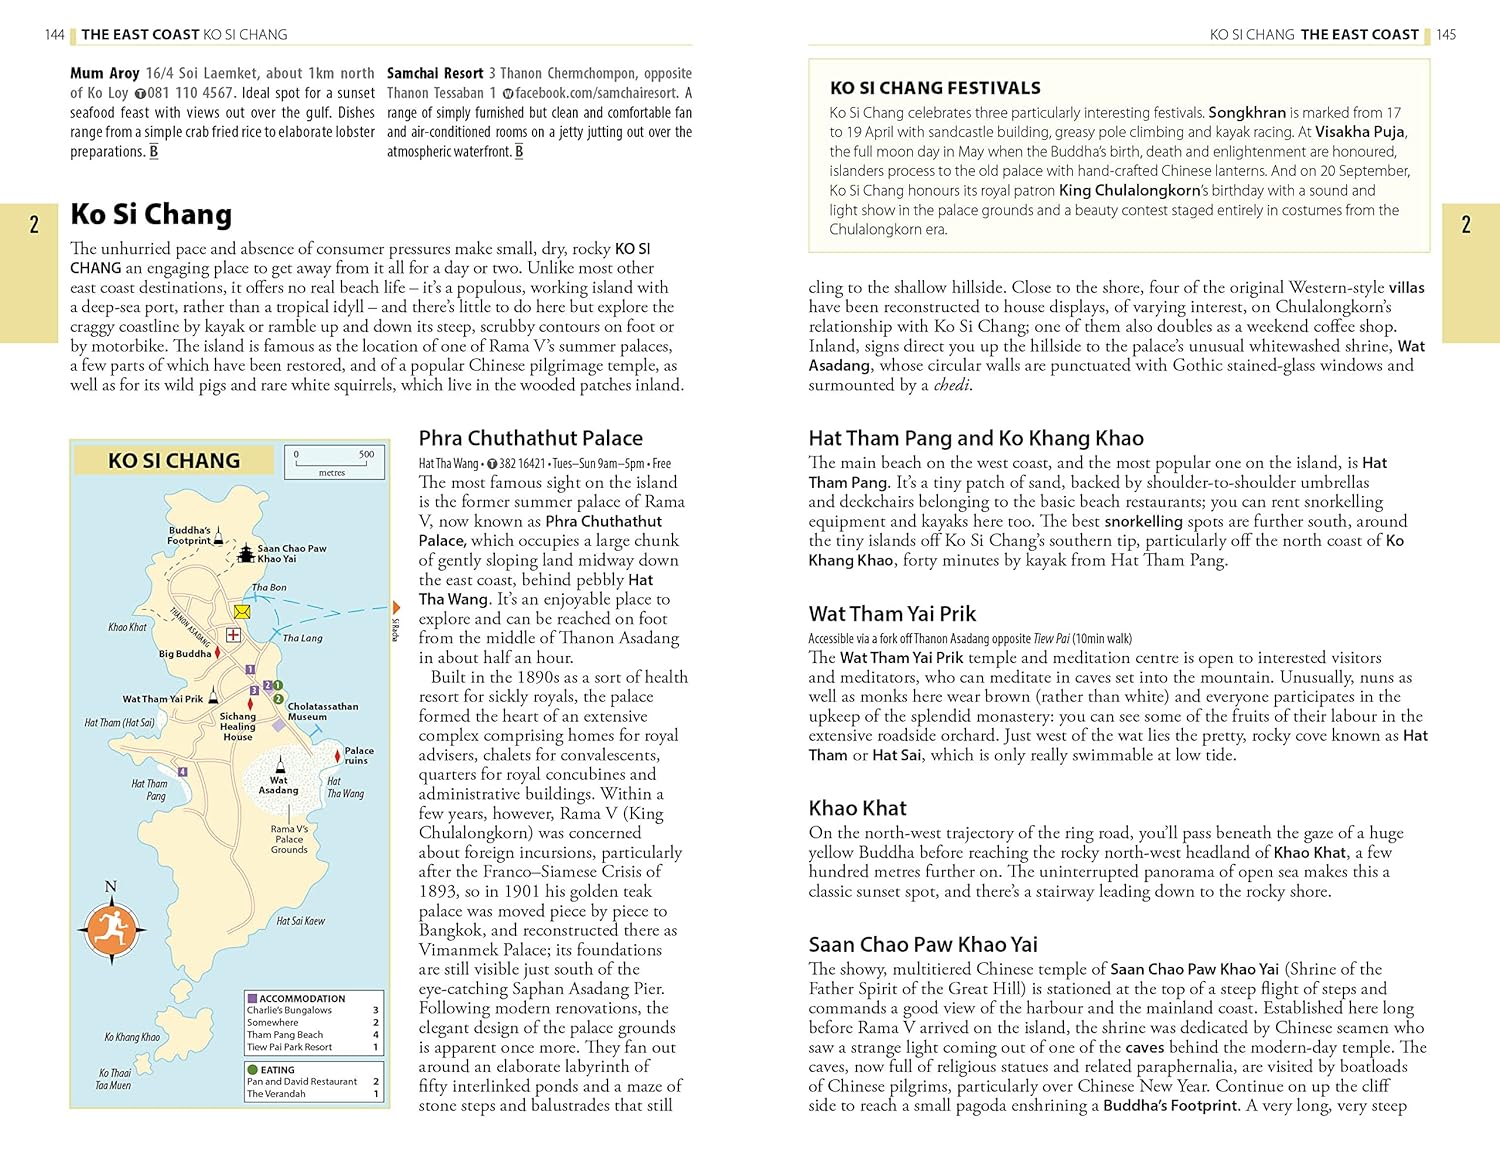 Thailand's Beaches & Islands - The Rough Guide